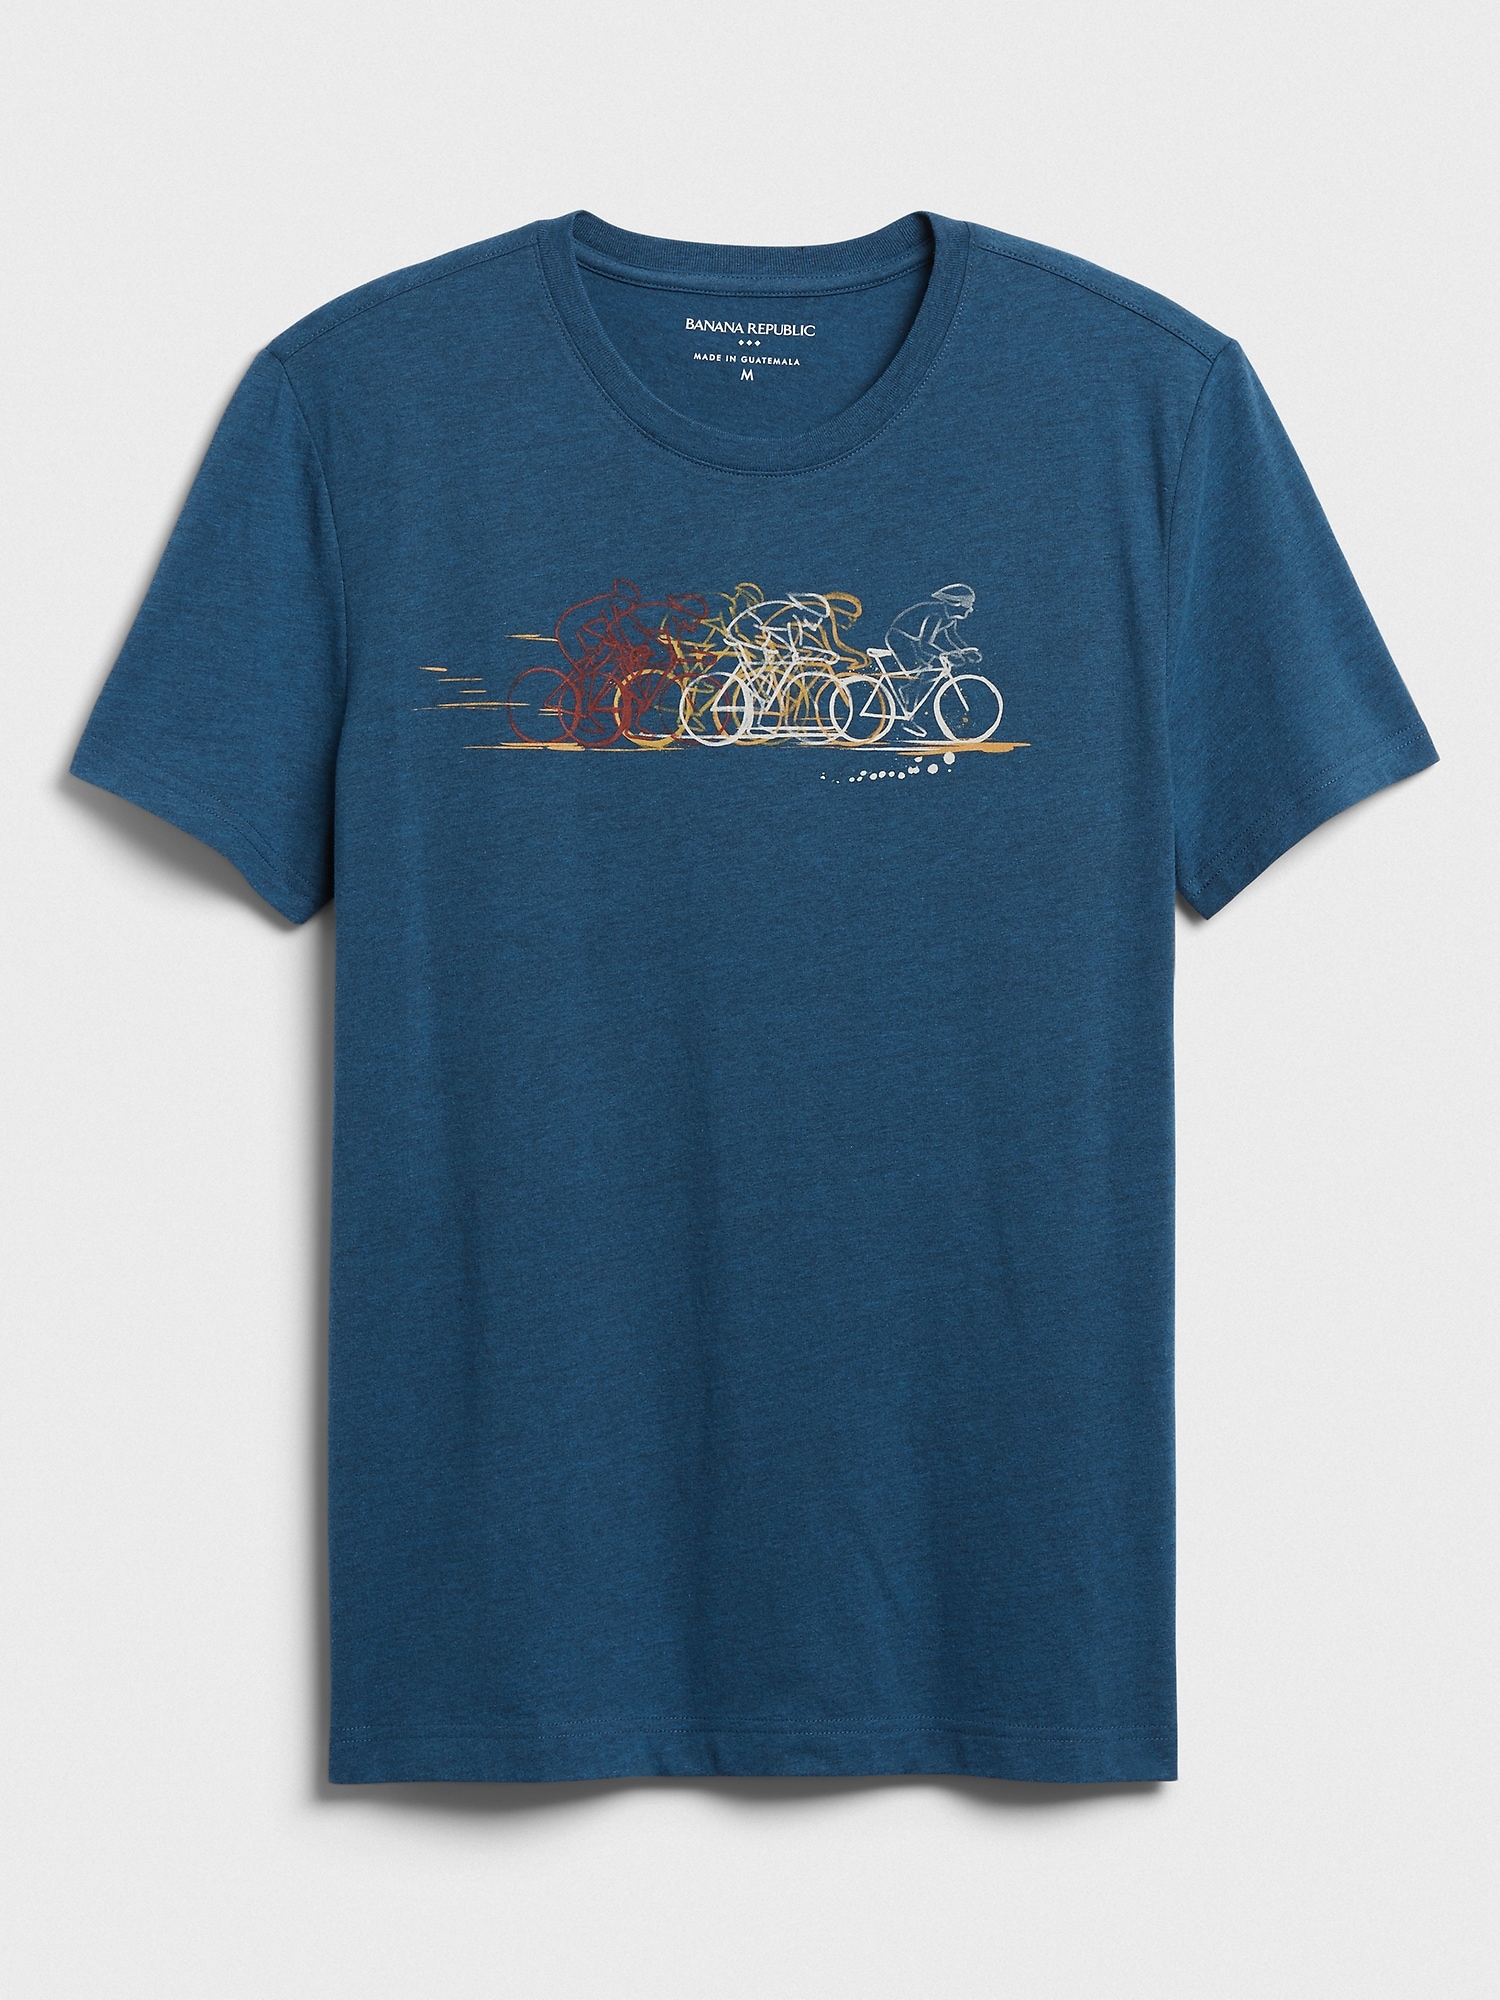 Racing Graphic T-Shirt